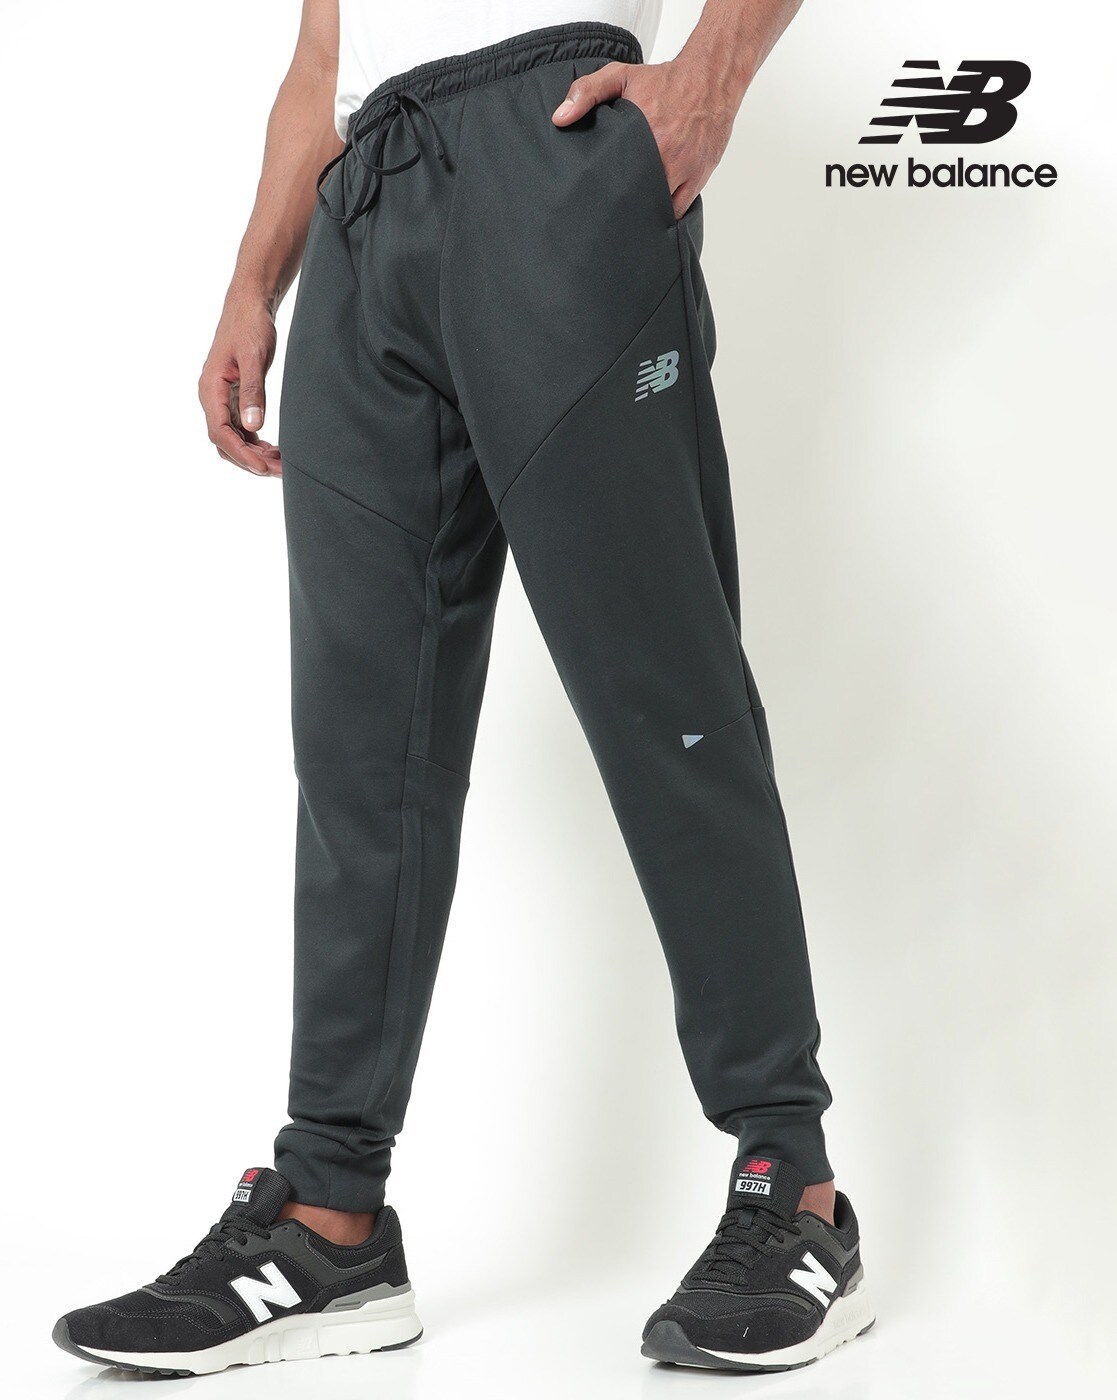 New Balance Track Pants for Men - MP13900 BK